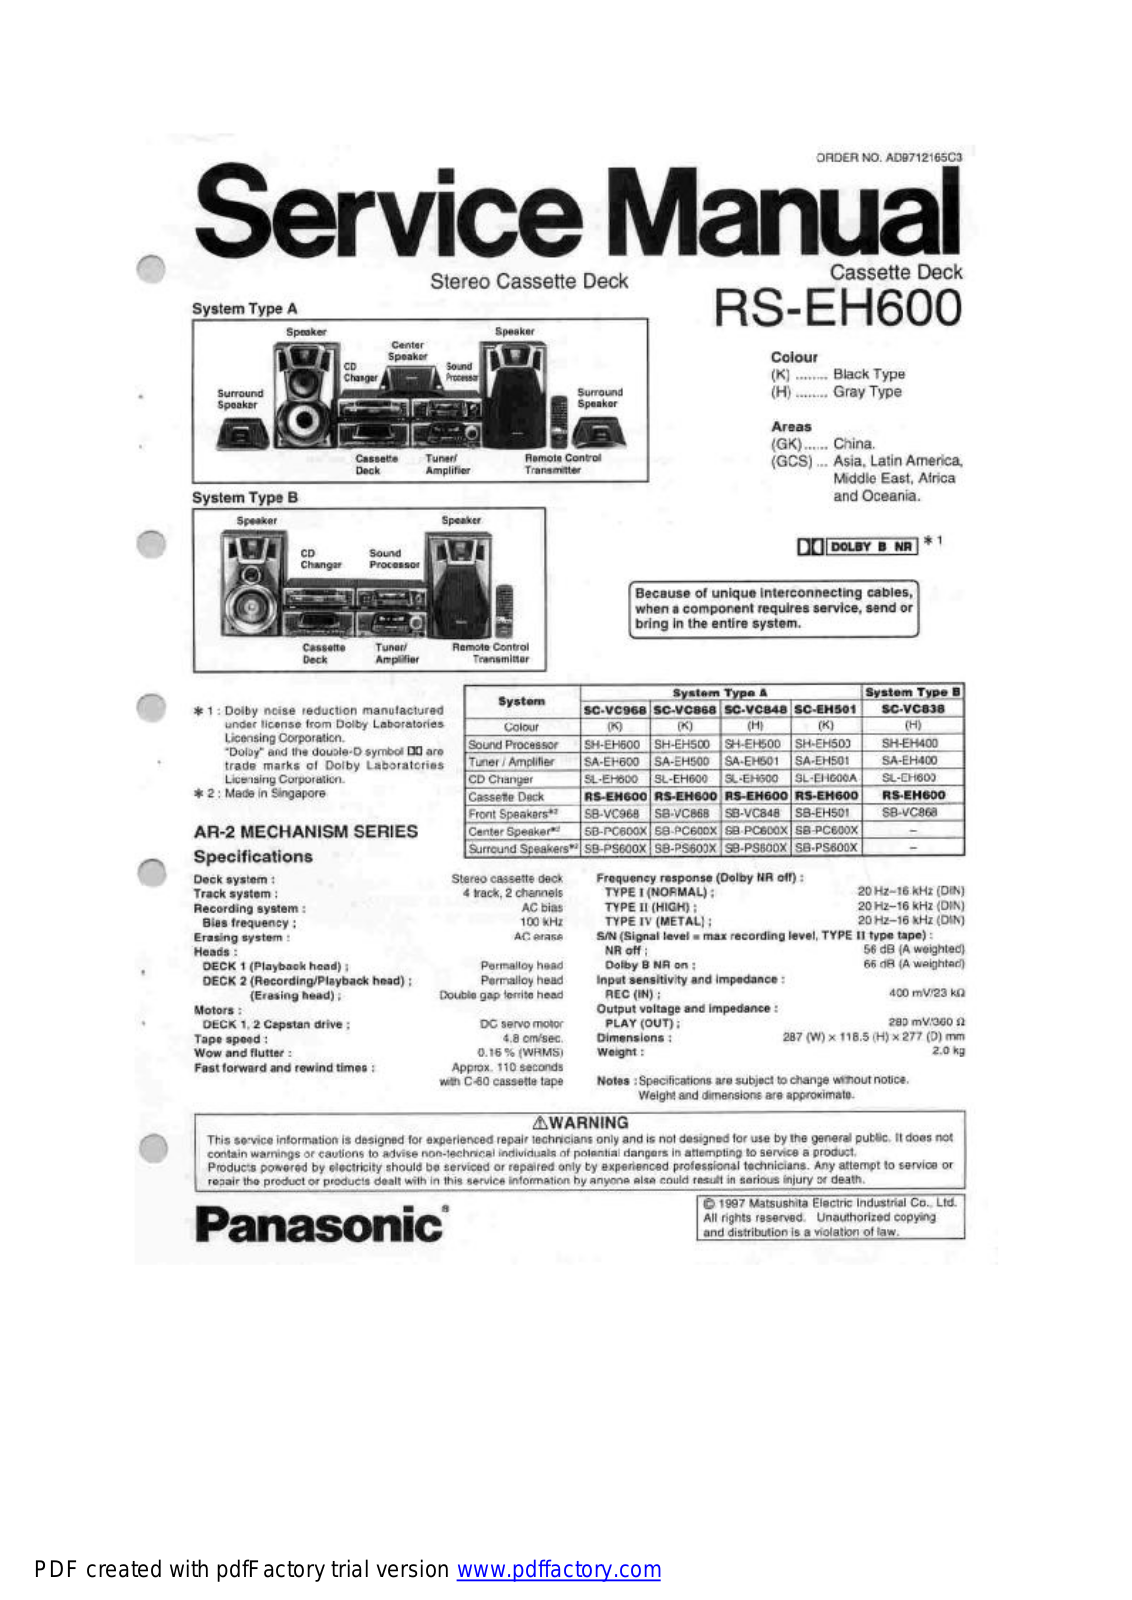 Panasonic RSEH-600 Service manual